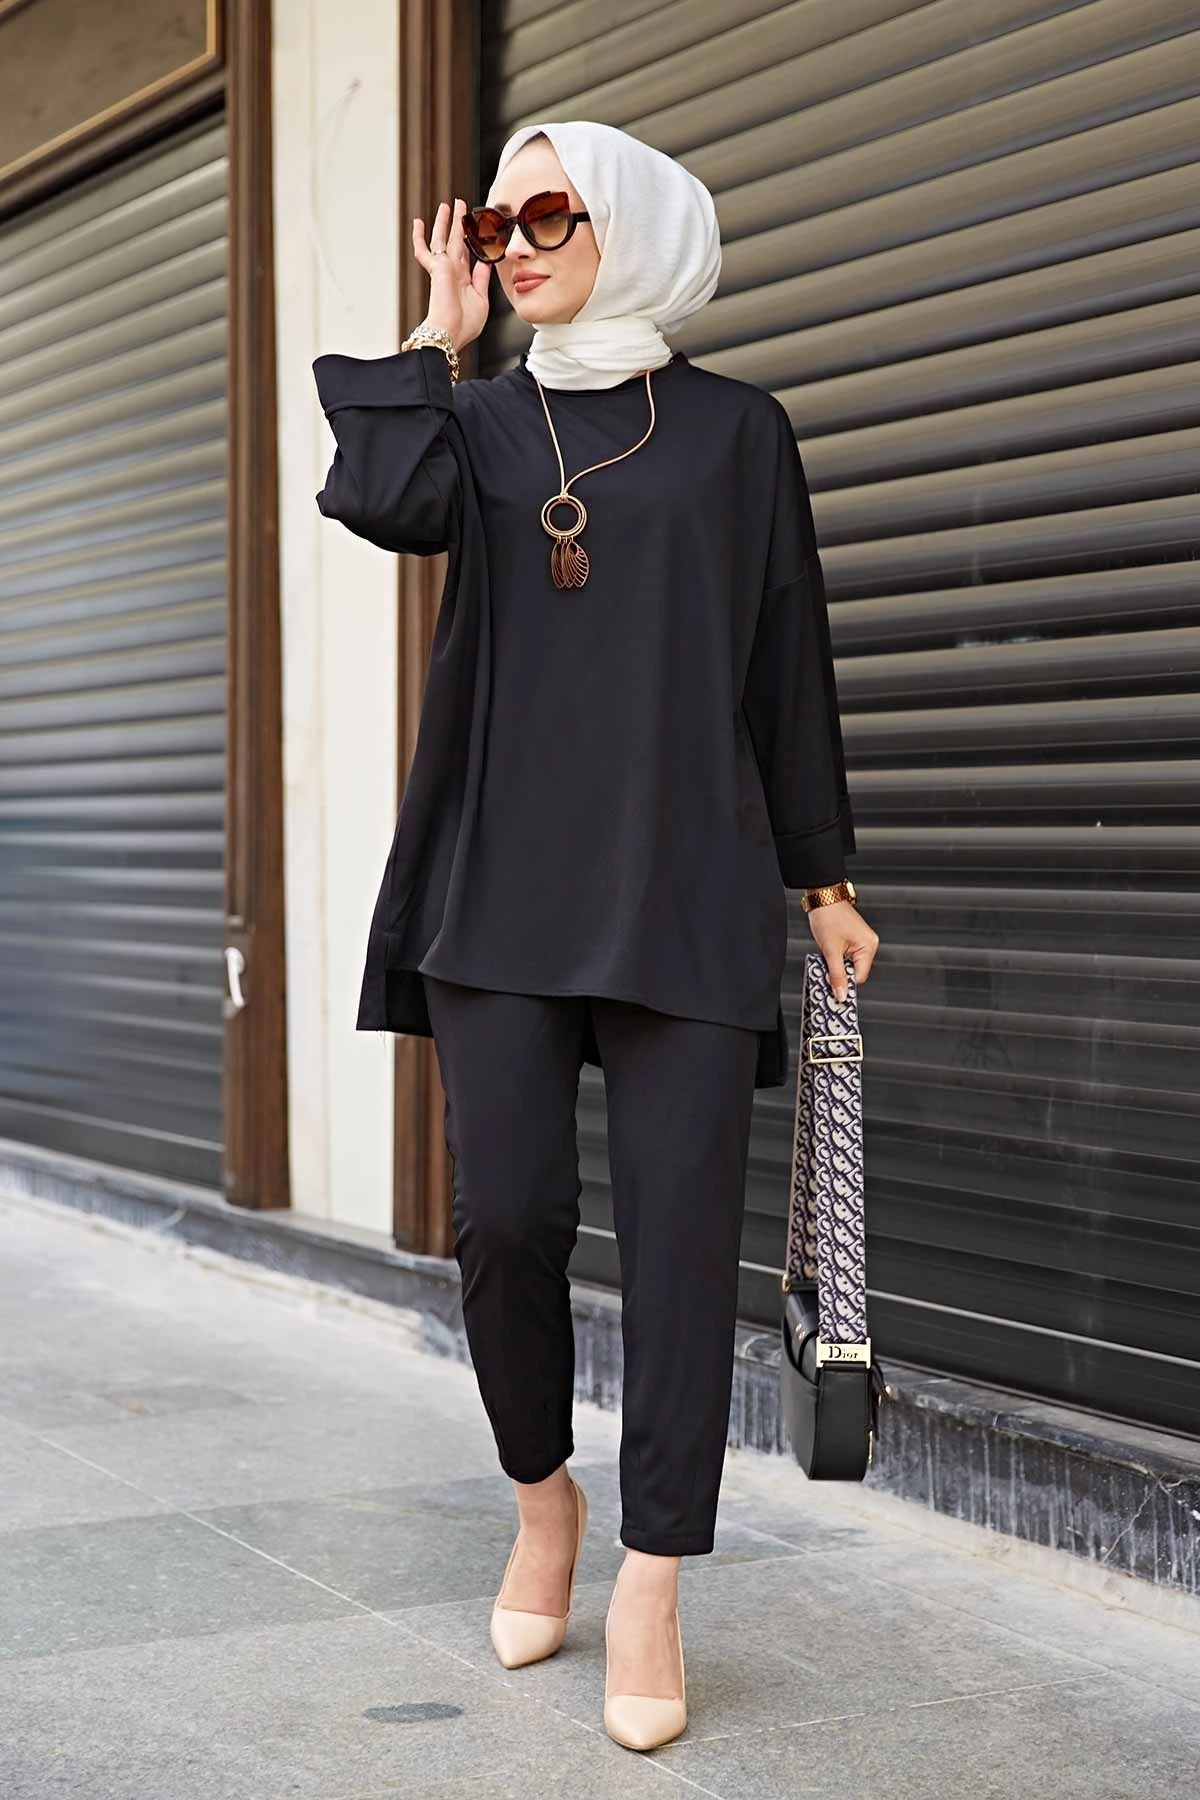 Women's Dual Suit Hijab Kombin Bottom Top Muslim dress hijab Muslim üstleri women suit dress abayas Islamic Turkish Dubai